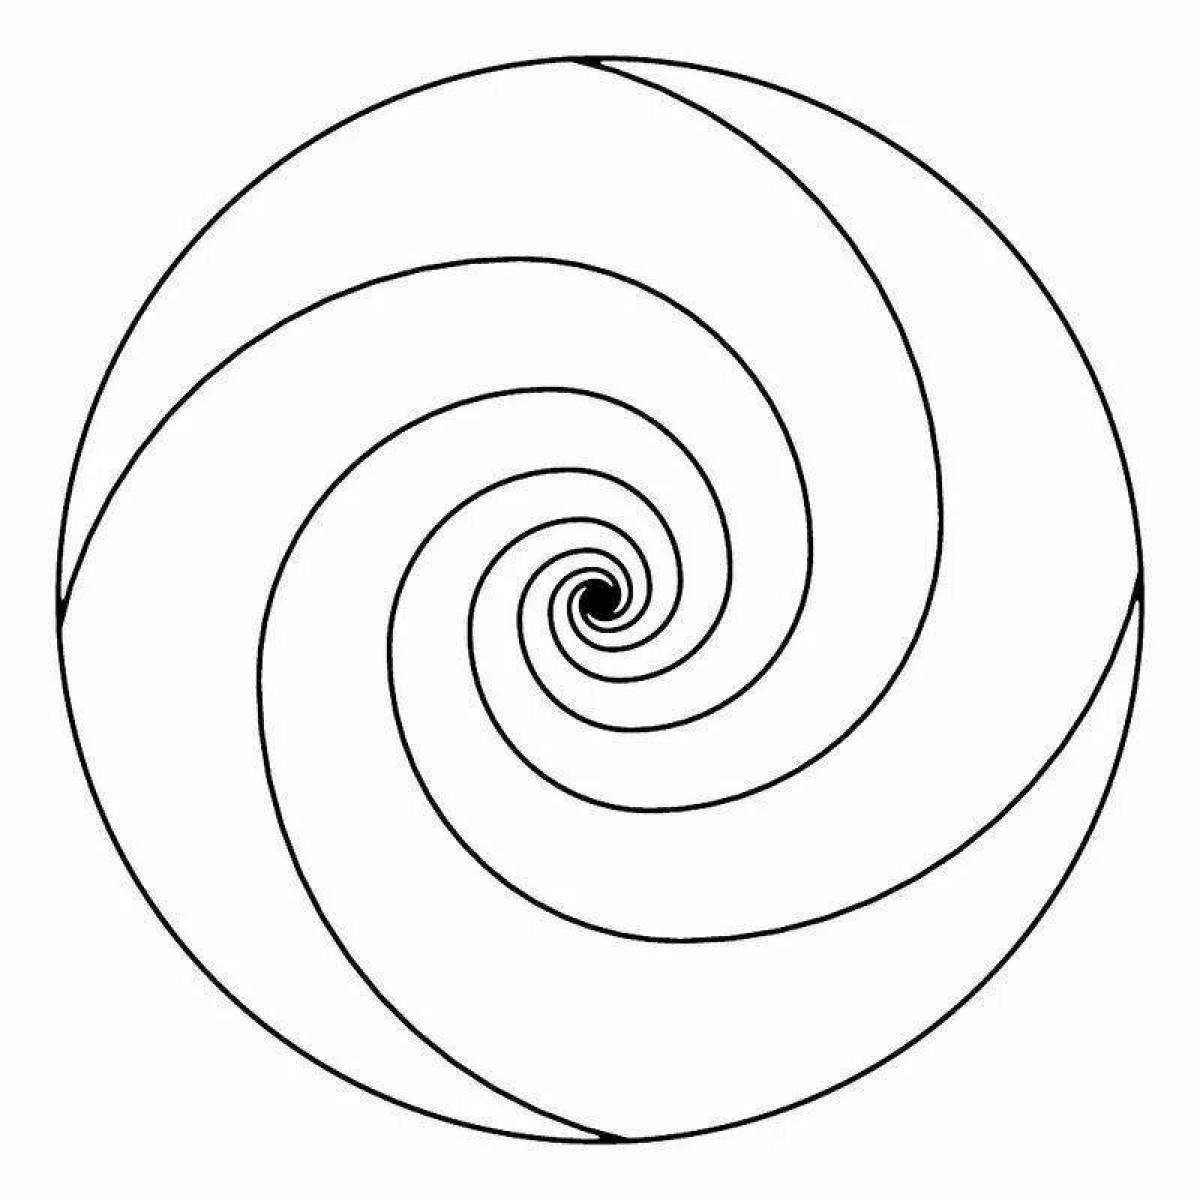 Joyful circular spiral create coloring page